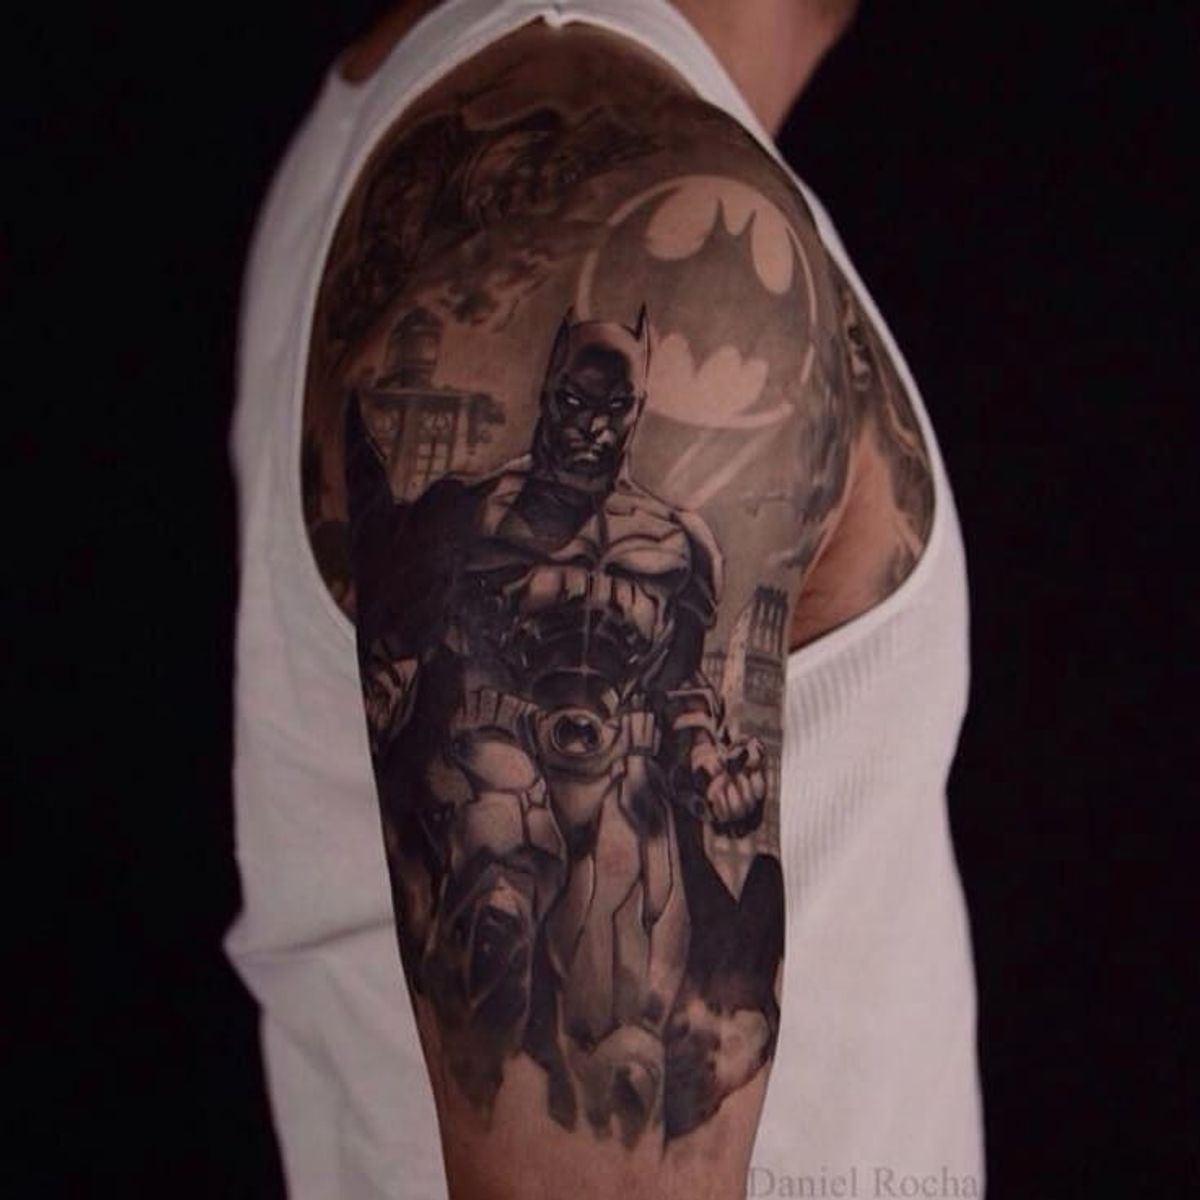 Tattoo uploaded by Xavier • Black and grey Batman tattoo by Daniel Rocha  #blackandgrey #danielrocha #batman • Tattoodo